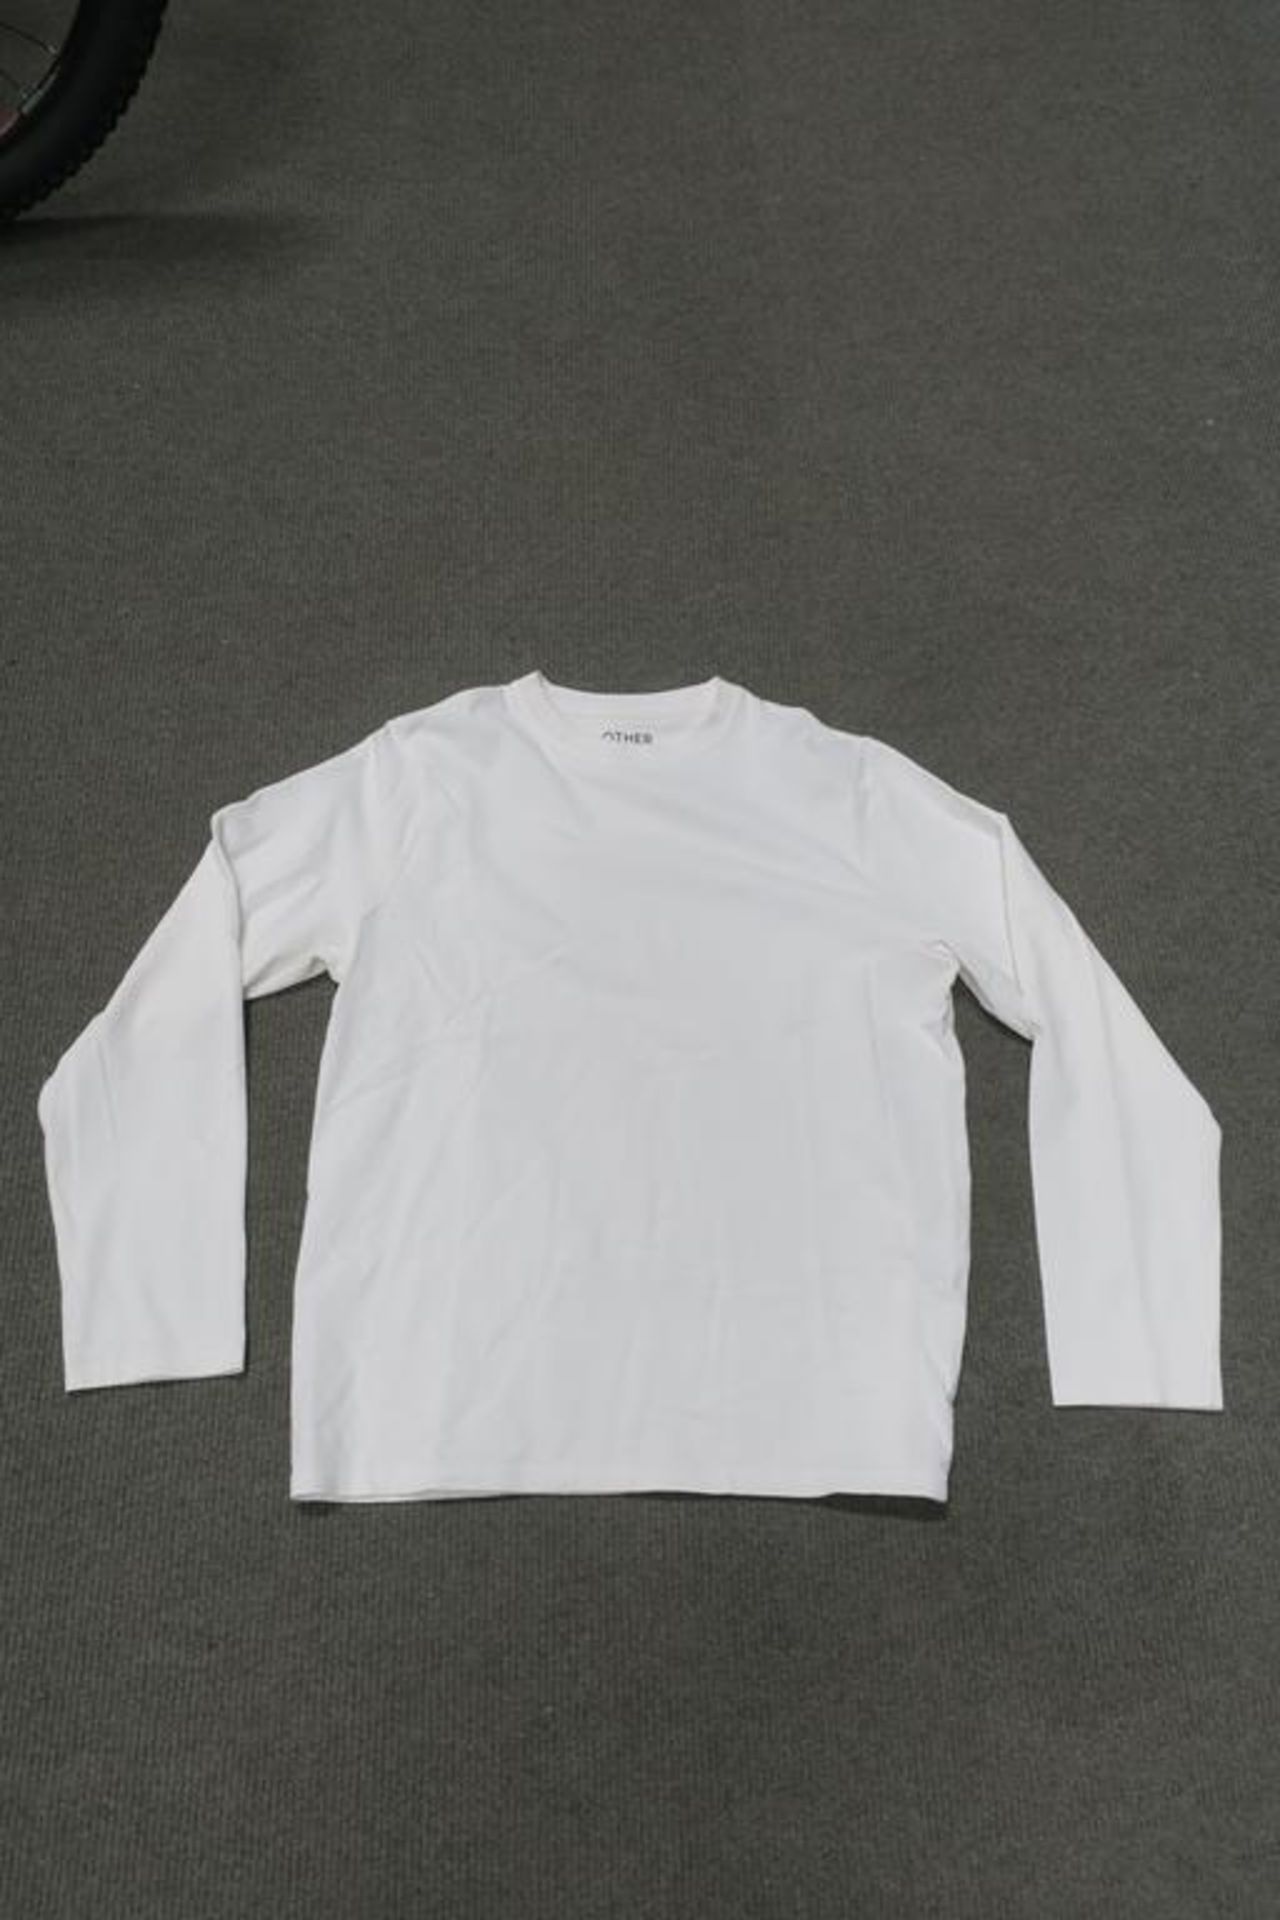 15 Other White Long Sleeved T-Shirts - 1 x XS, 7 x M, 4 x L, 3 x XL